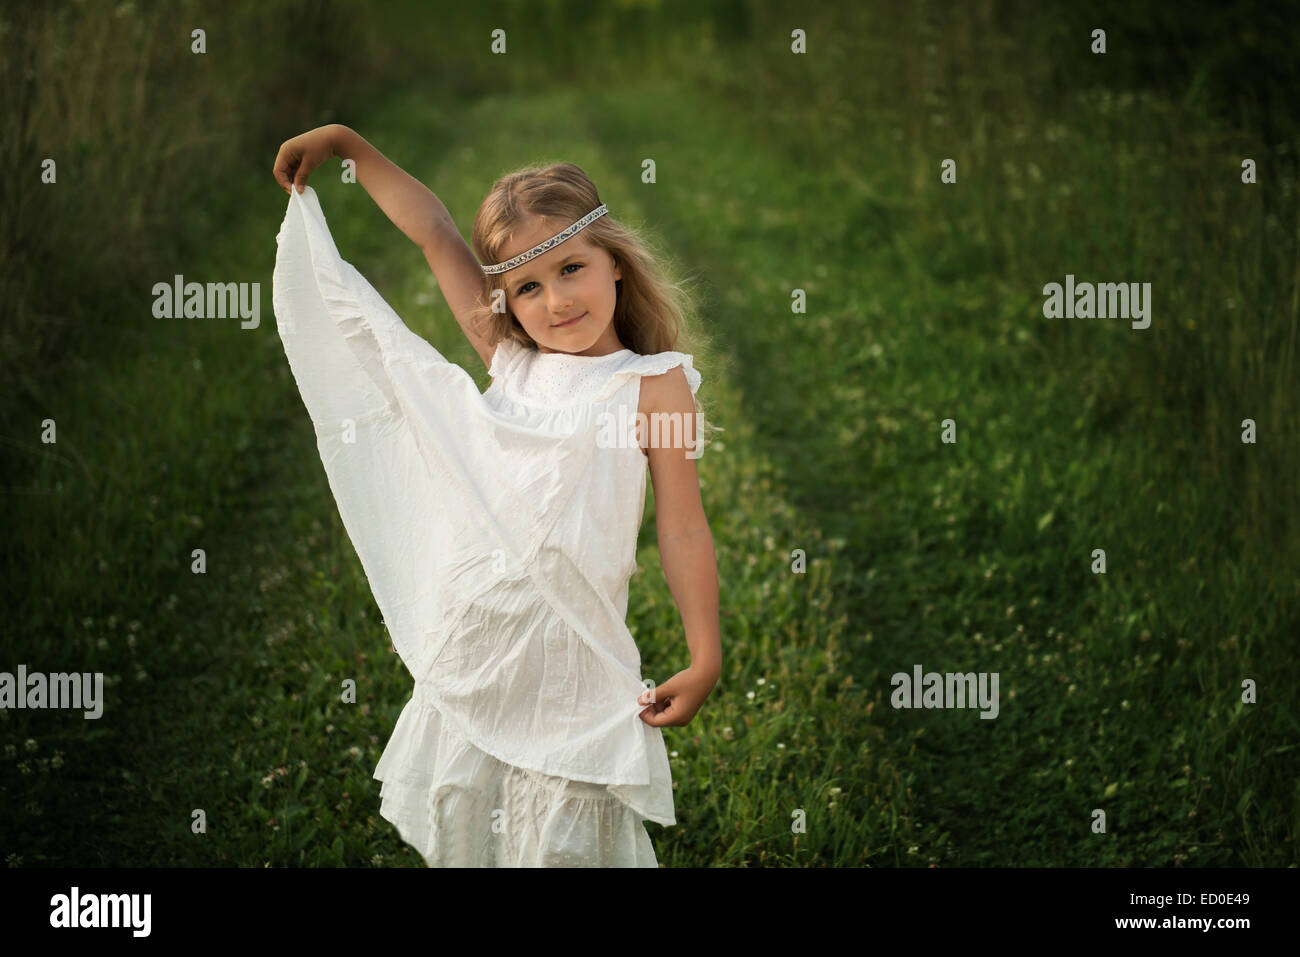 Young girl (4-5) posing in long white dress Stock Photo